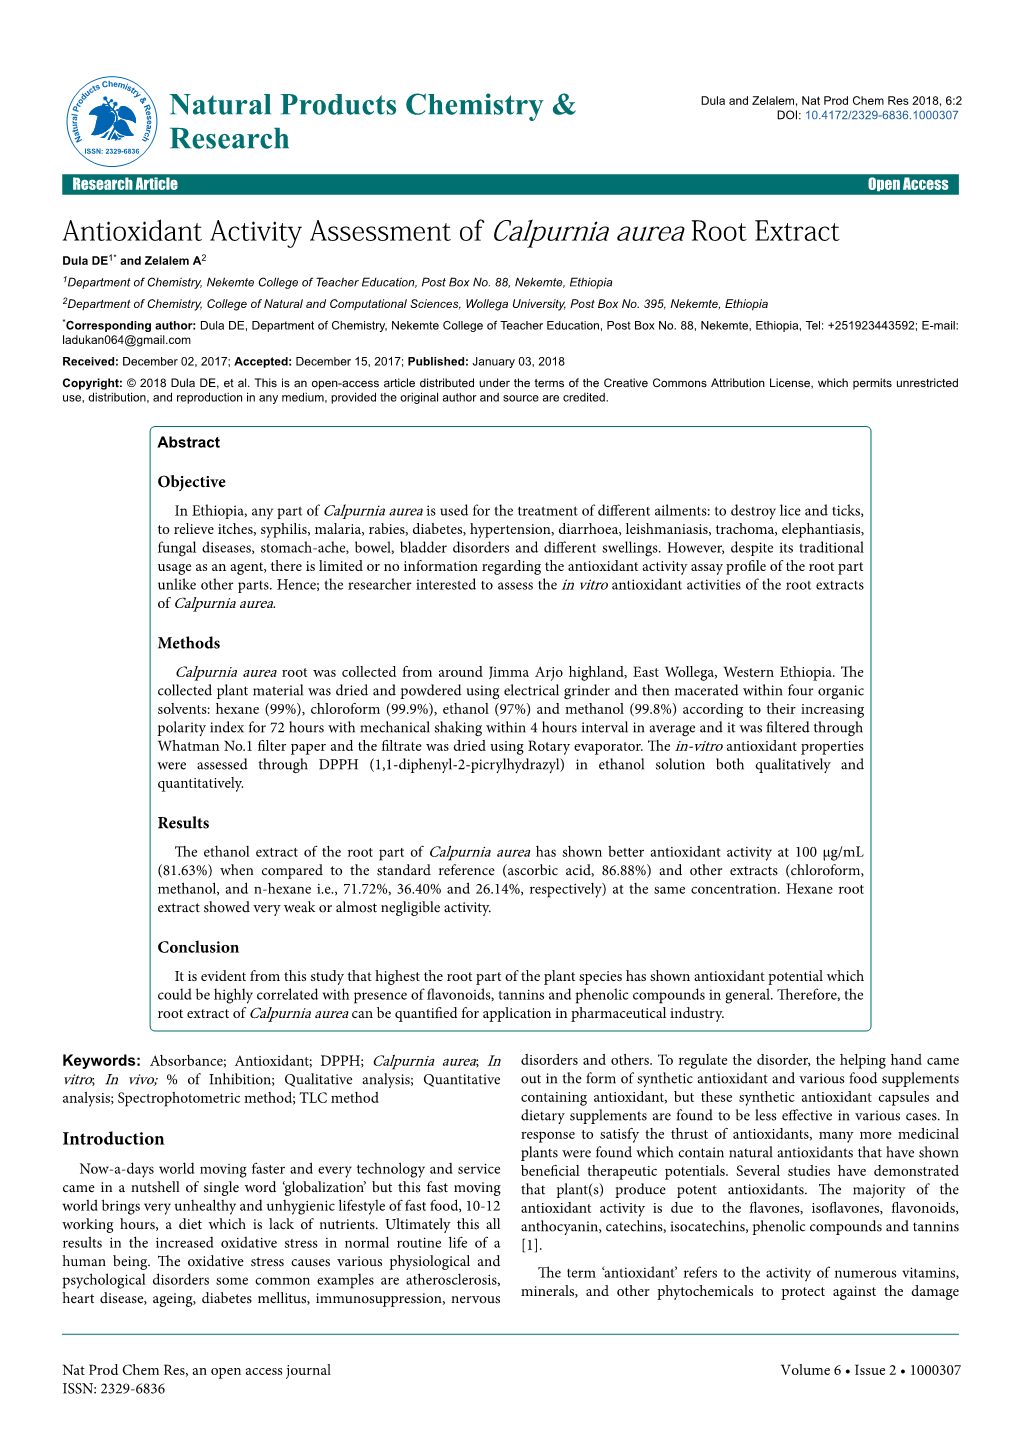 Antioxidant Activity Assessment of Calpurnia Aurea Root Extract Dula DE1* and Zelalem A2 1Department of Chemistry, Nekemte College of Teacher Education, Post Box No